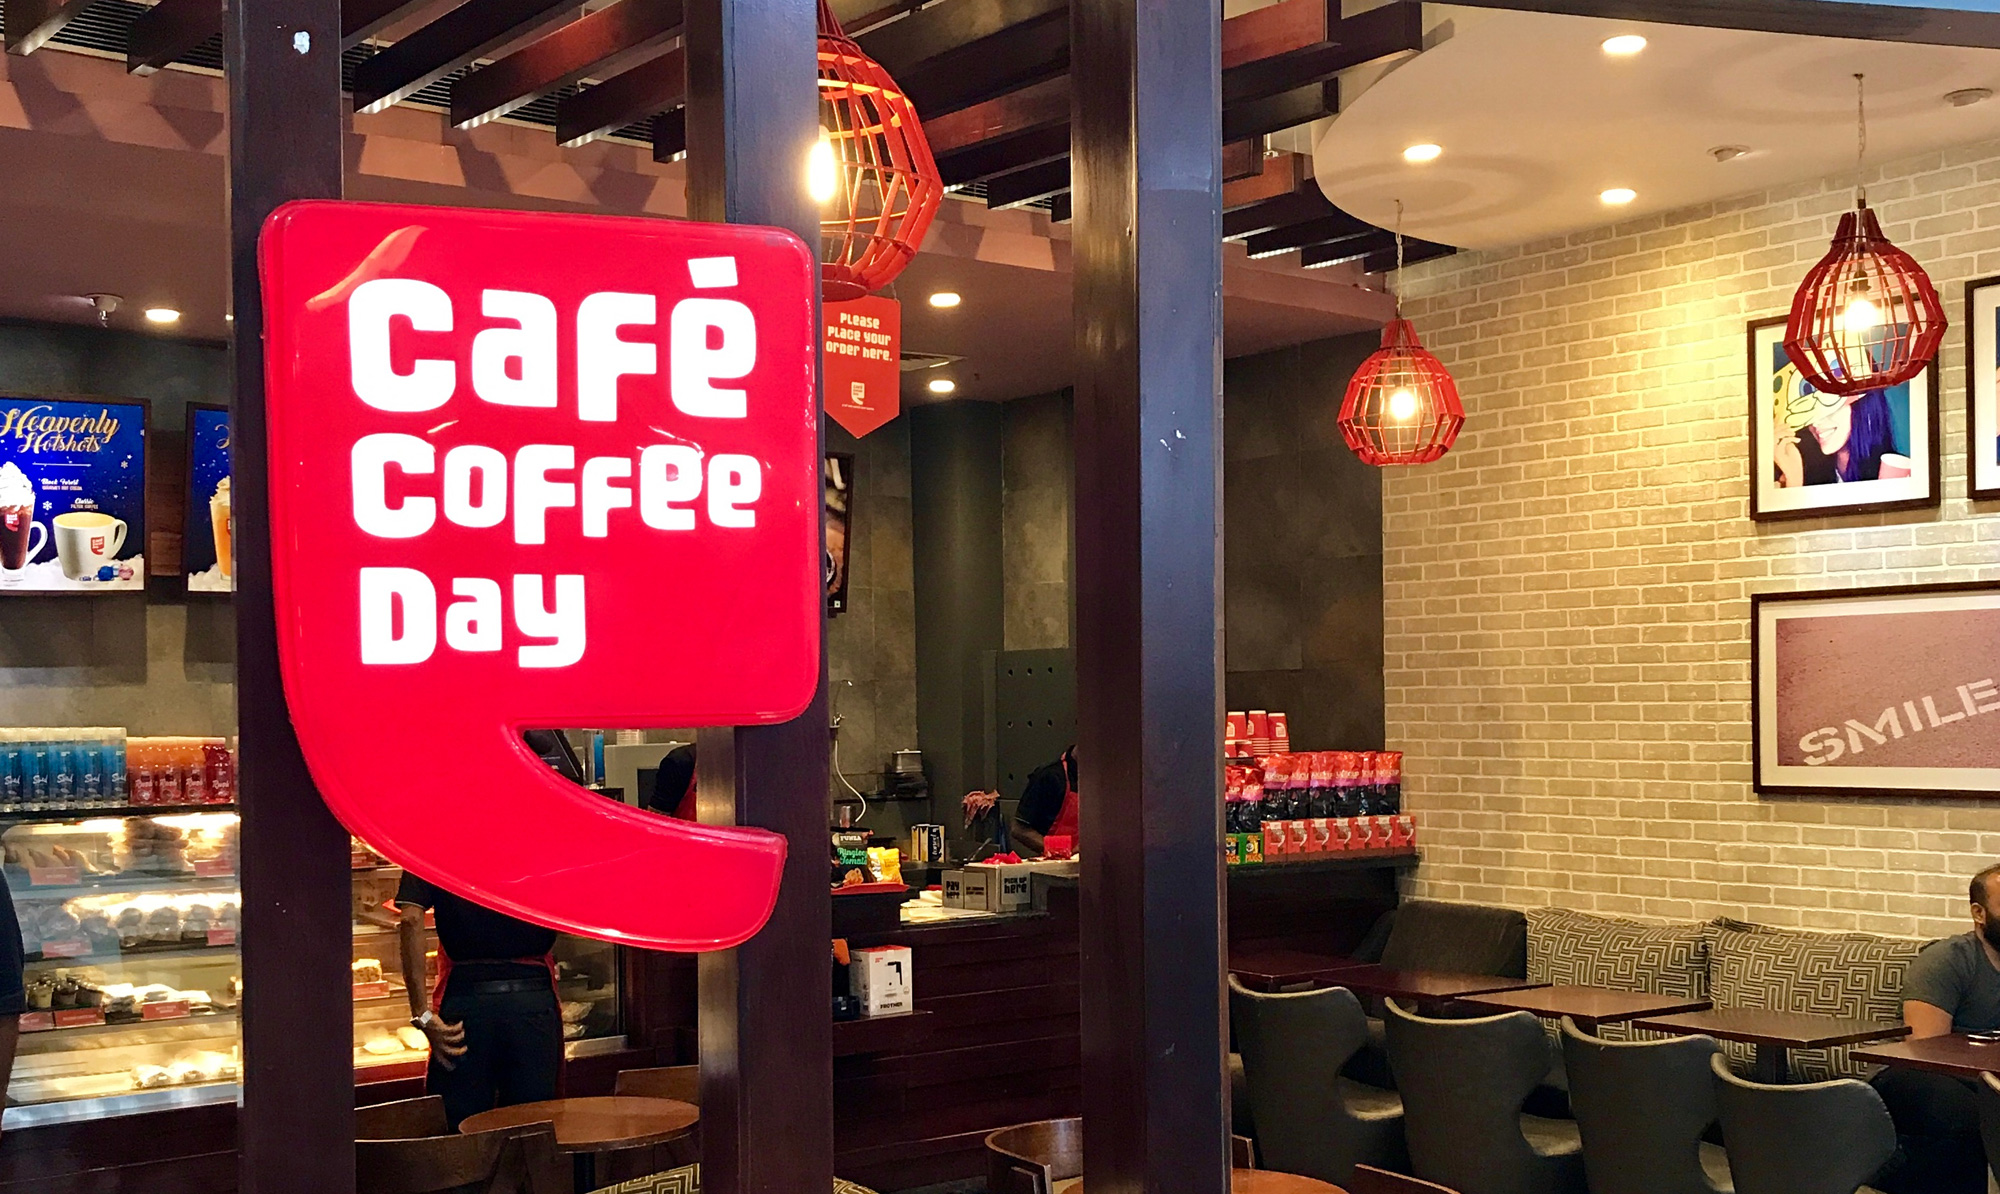 Café Coffee Day founder Siddhartha faces an income-tax demand